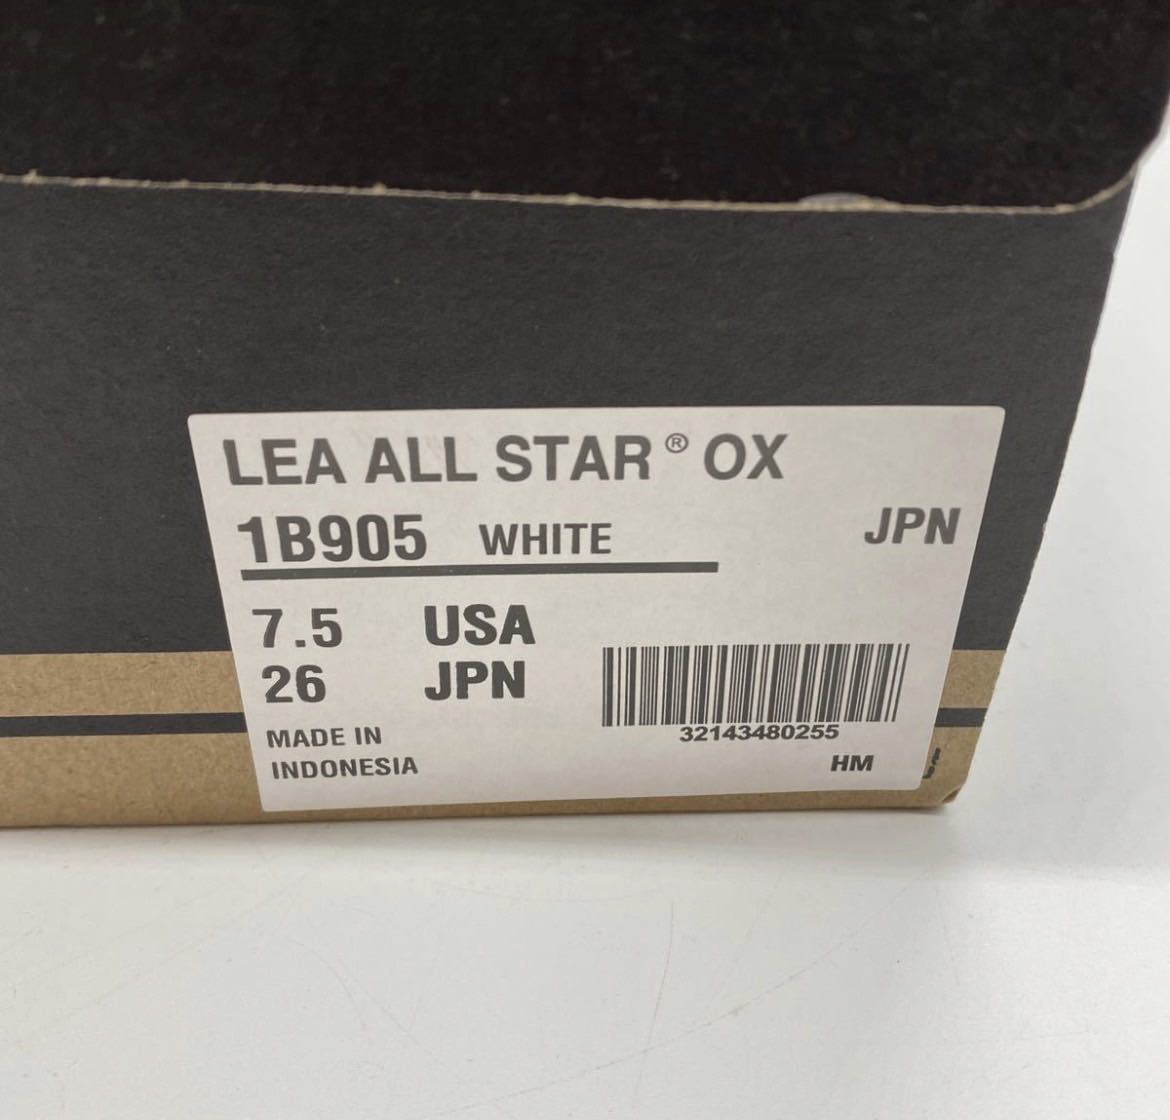 【26cm】新品 CONVERSE LEATHER ALL STAR OX WHITE コンバース レザー オールスター ローカット ホワイト (1B905) 2918_画像8